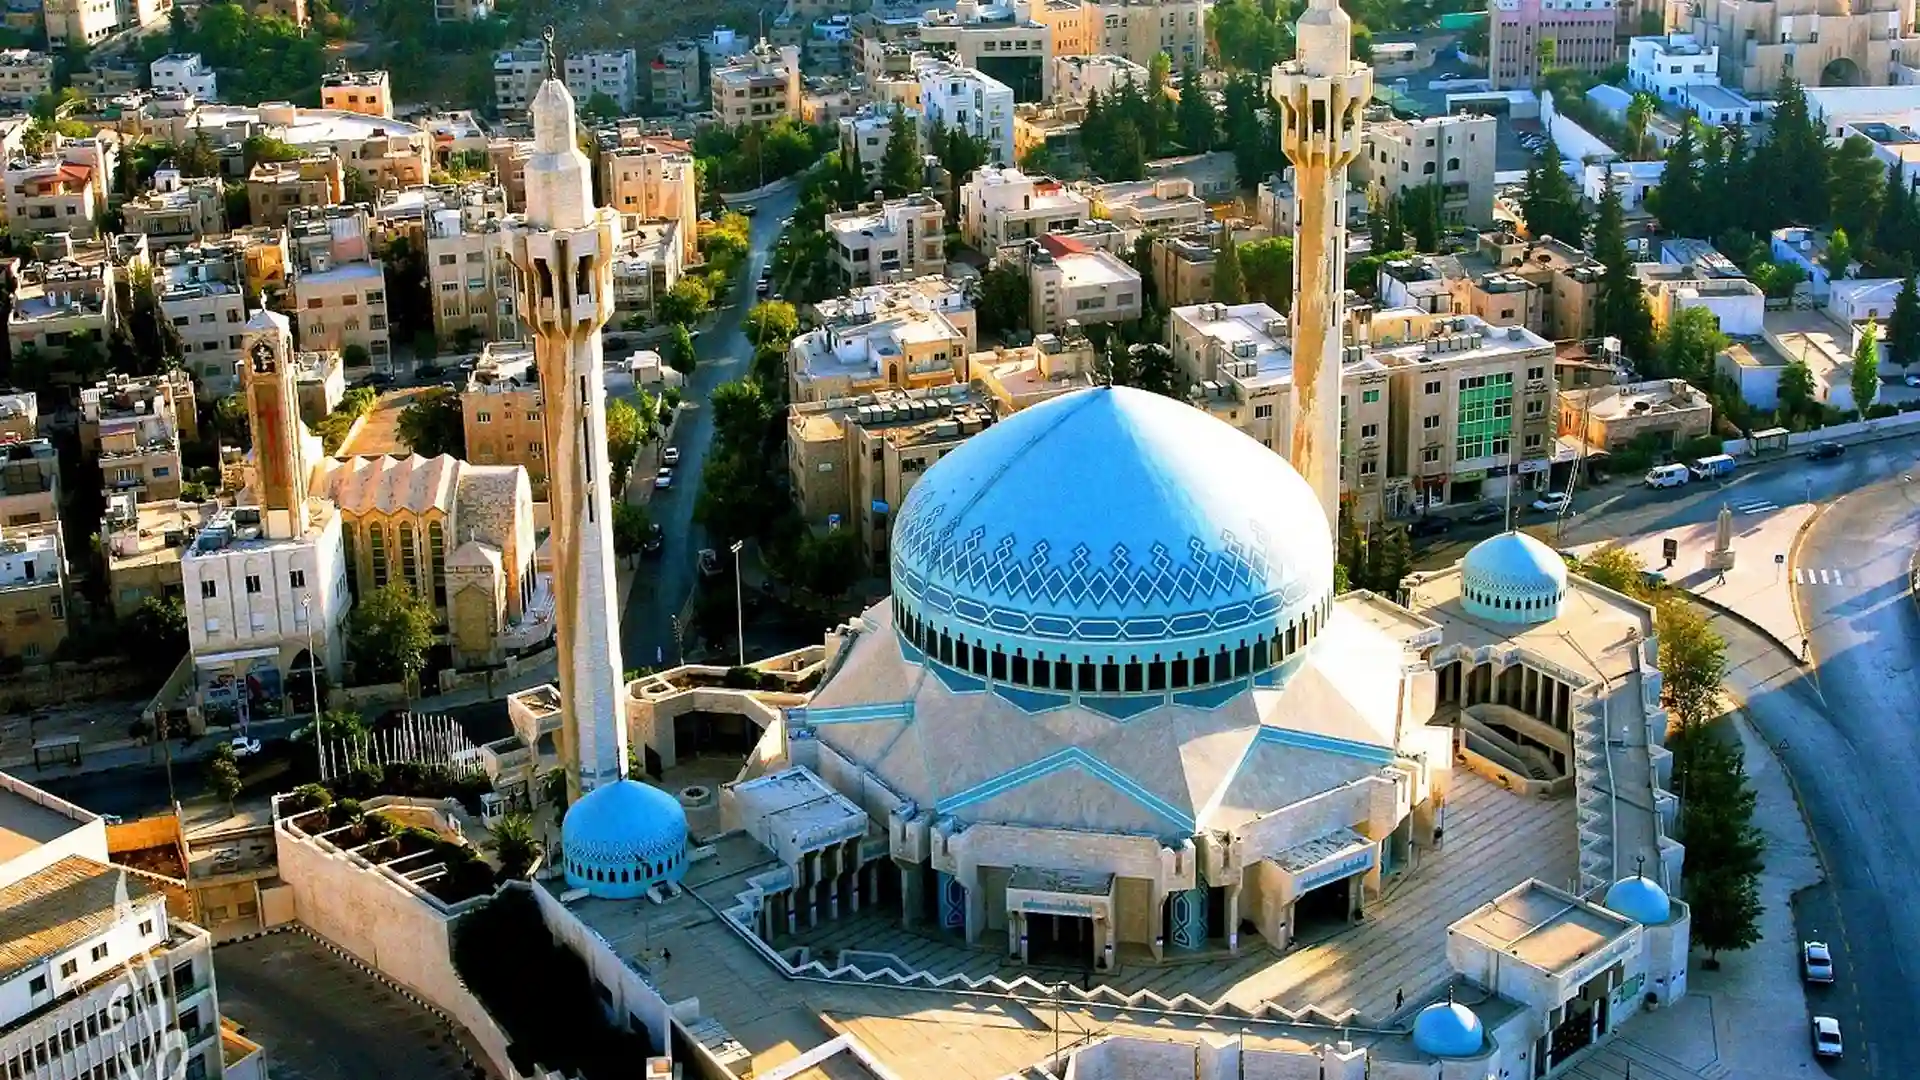 Amman Jordan
Amman Mosque
King Abdullah i Mosque